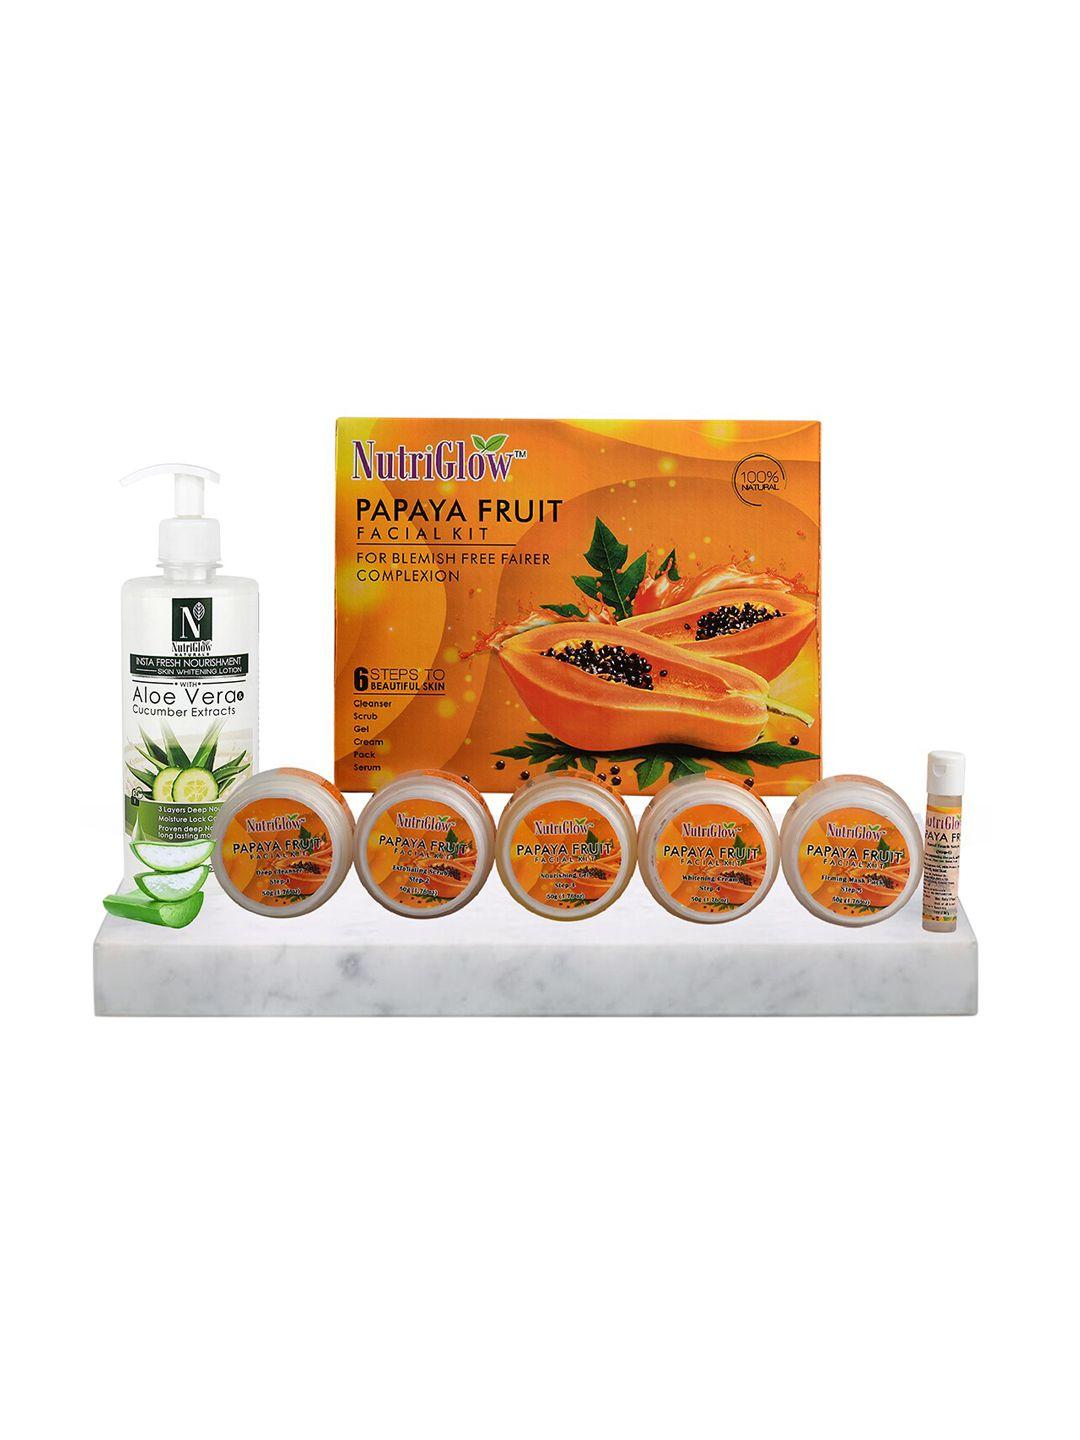 nutriglow set of papaya facial kit 250 g + 10 ml & aloe vera-cucumber lotion 500 ml